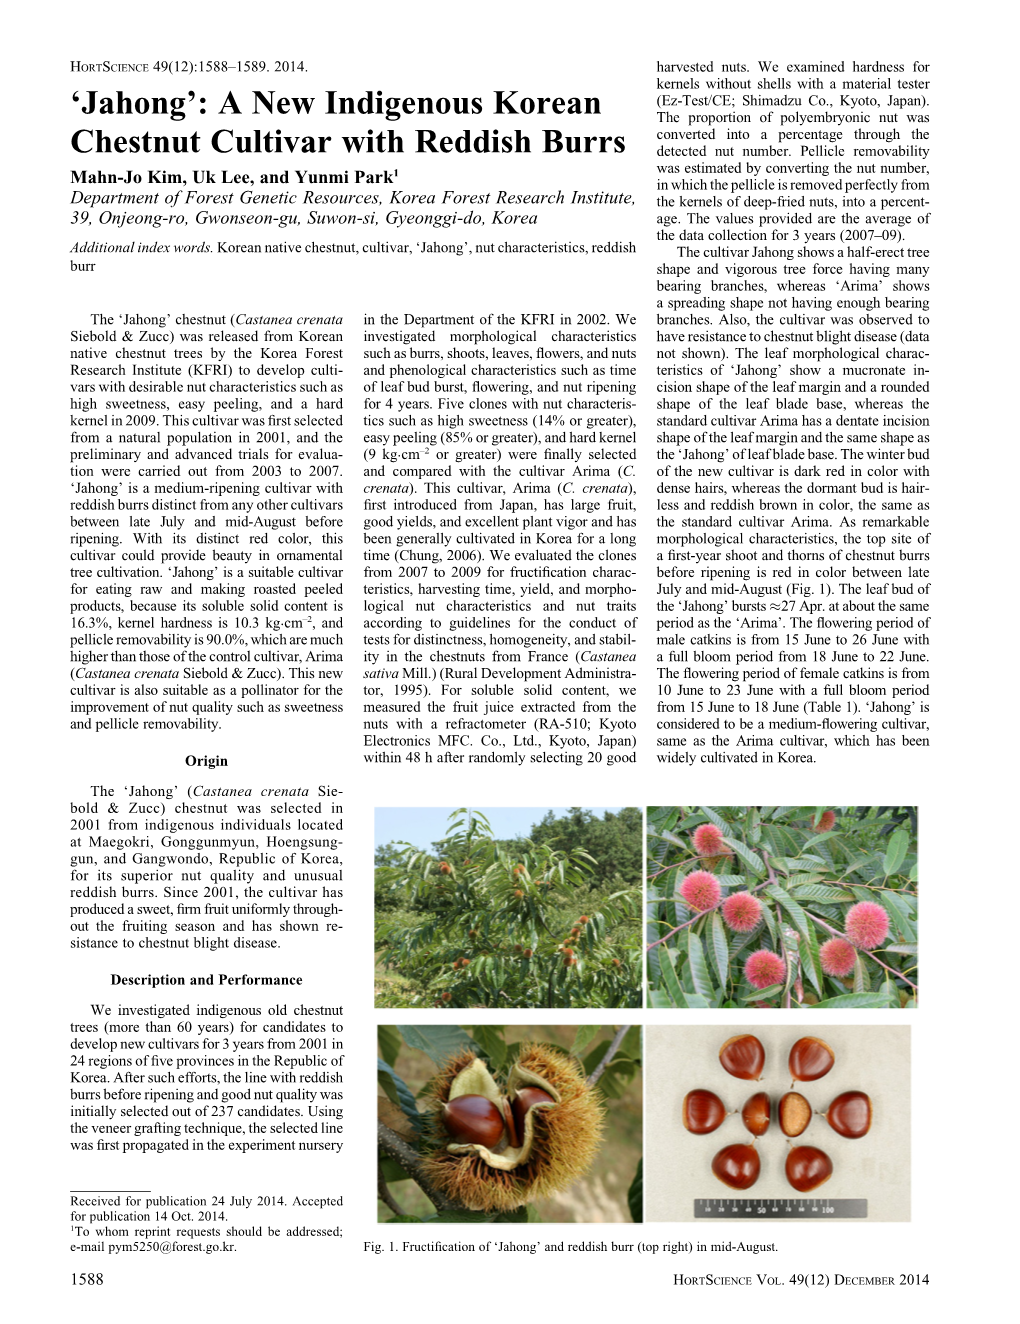 'Jahong': a New Indigenous Korean Chestnut Cultivar with Reddish Burrs